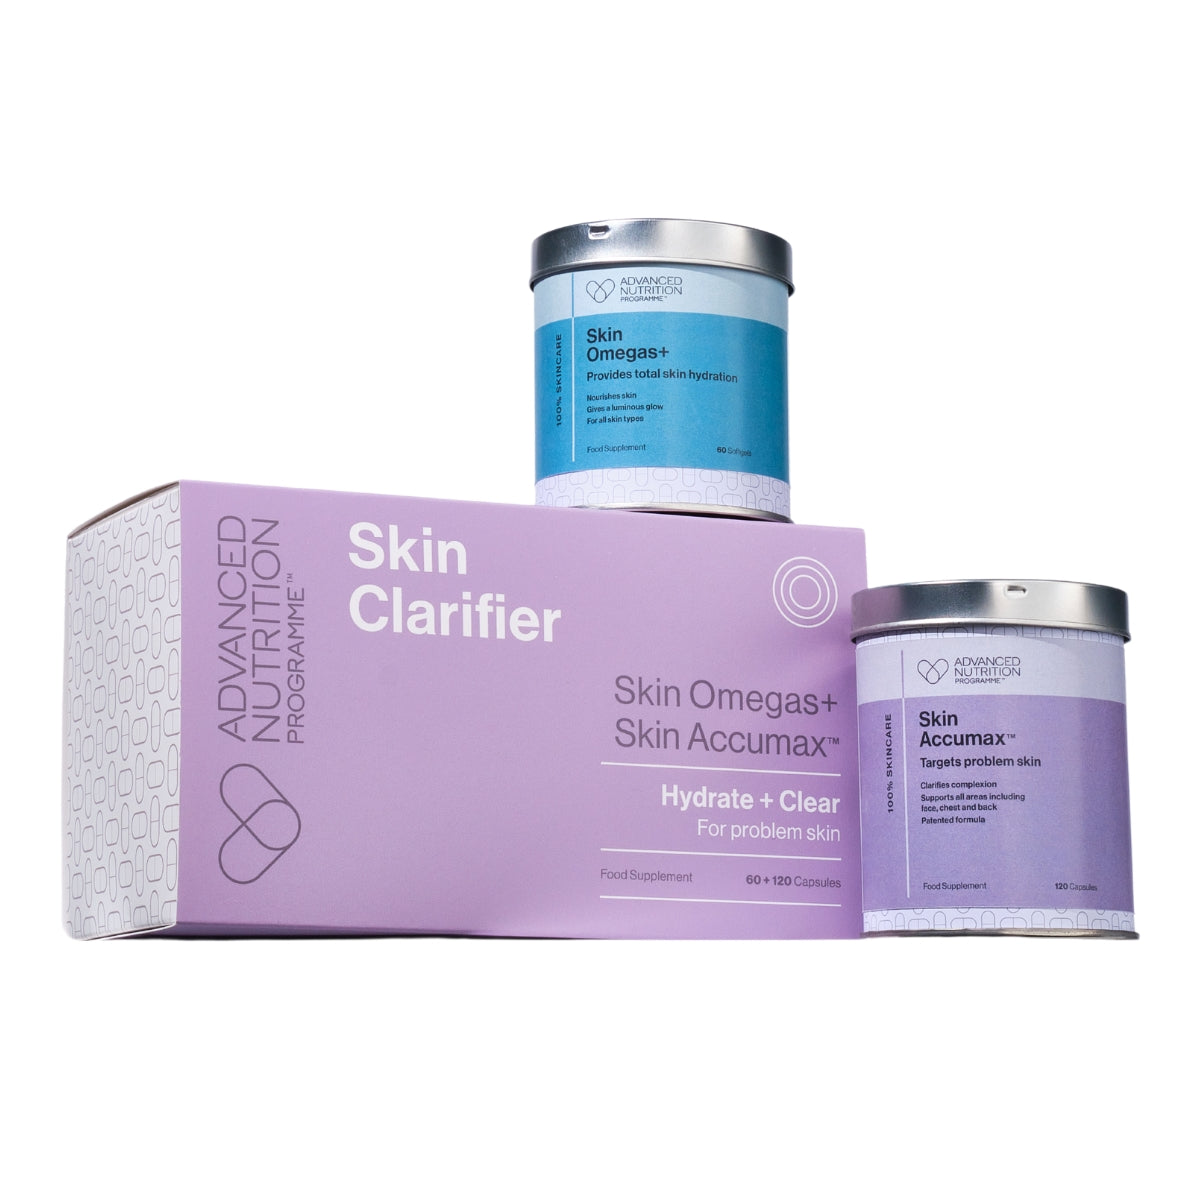 Advanced Nutrition Programme Festive Skin Clarifier Accumax & Omegas